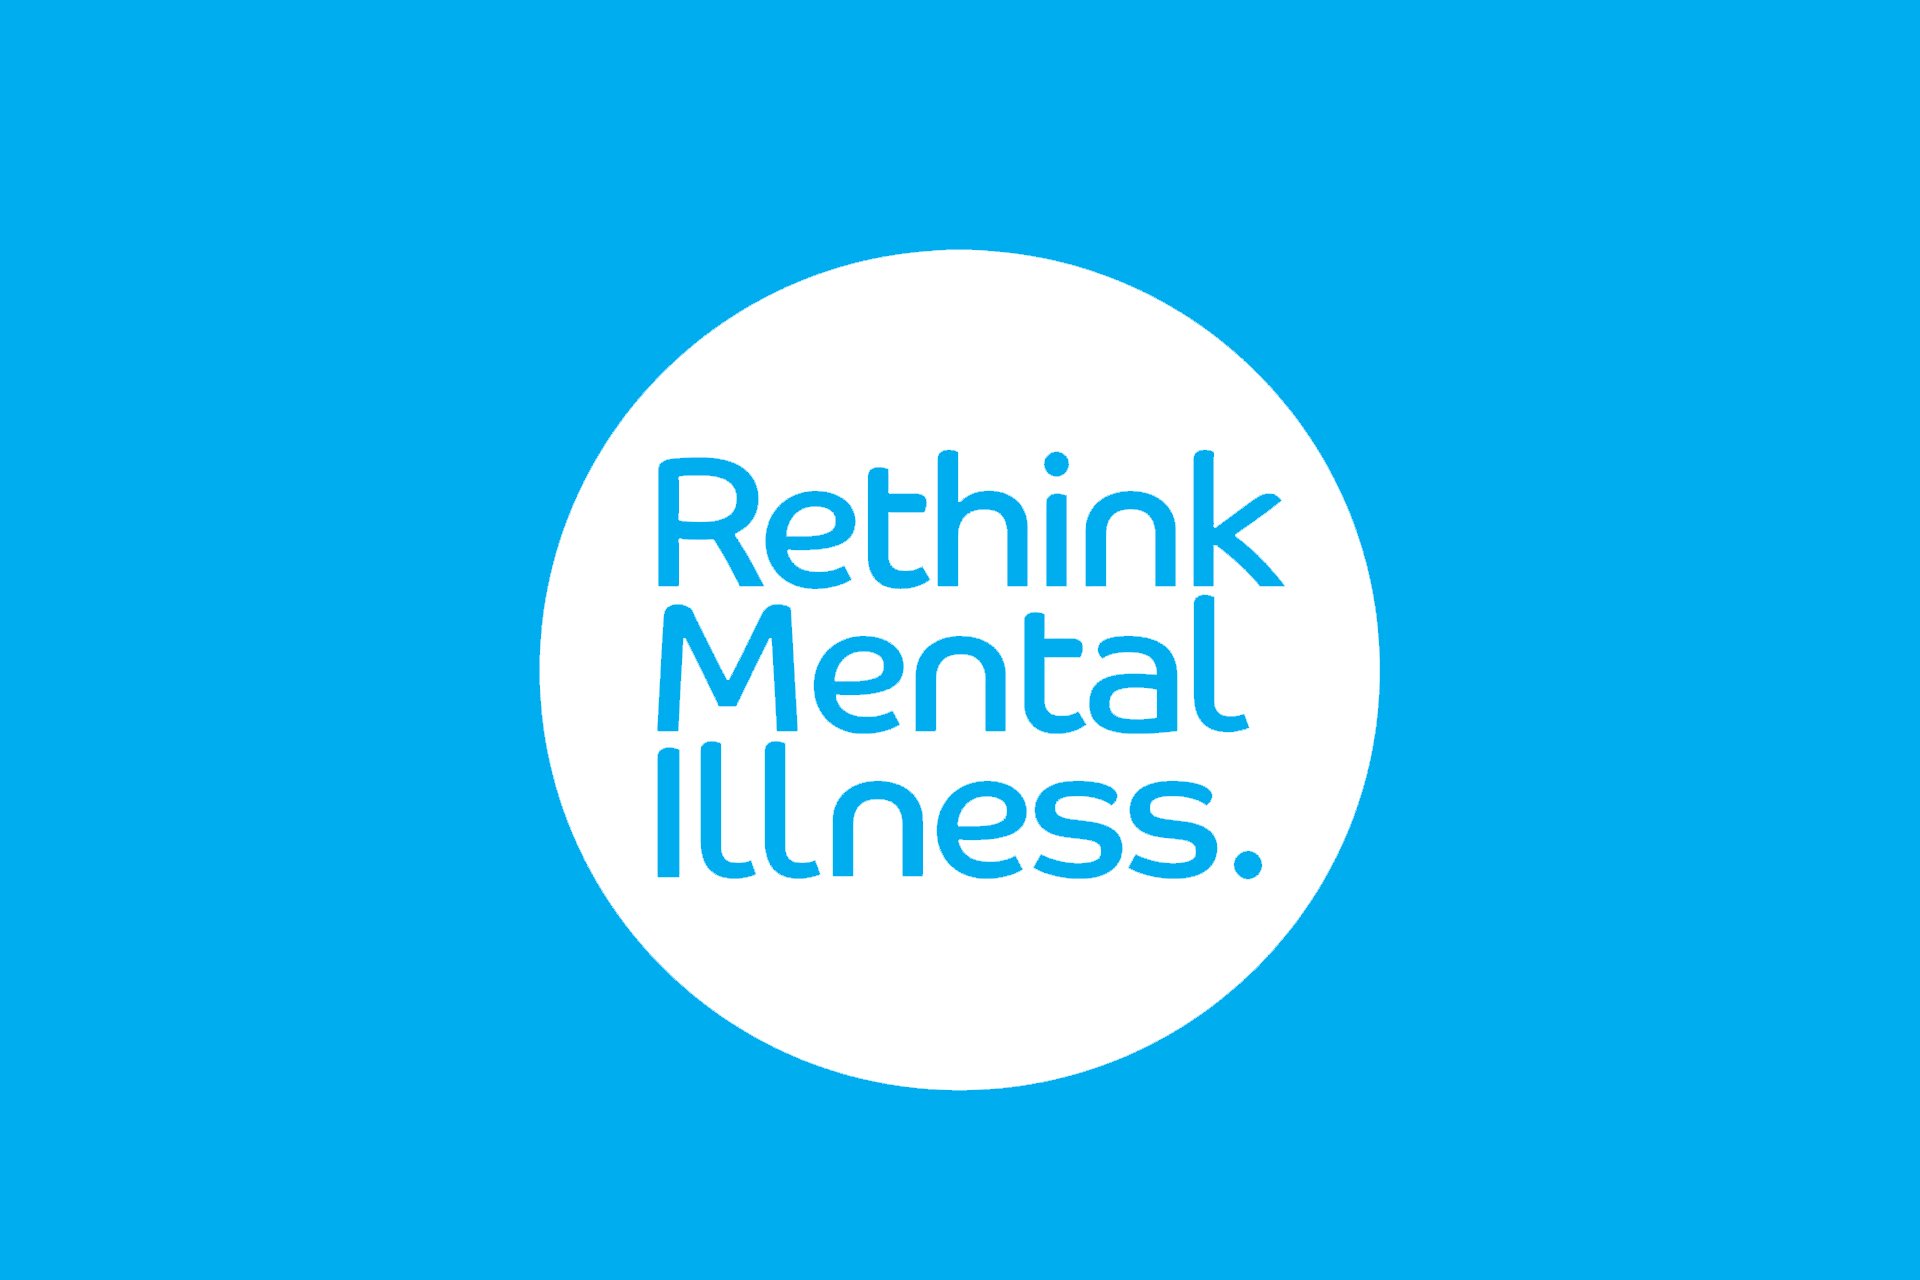 Rethink Mental Illness charity